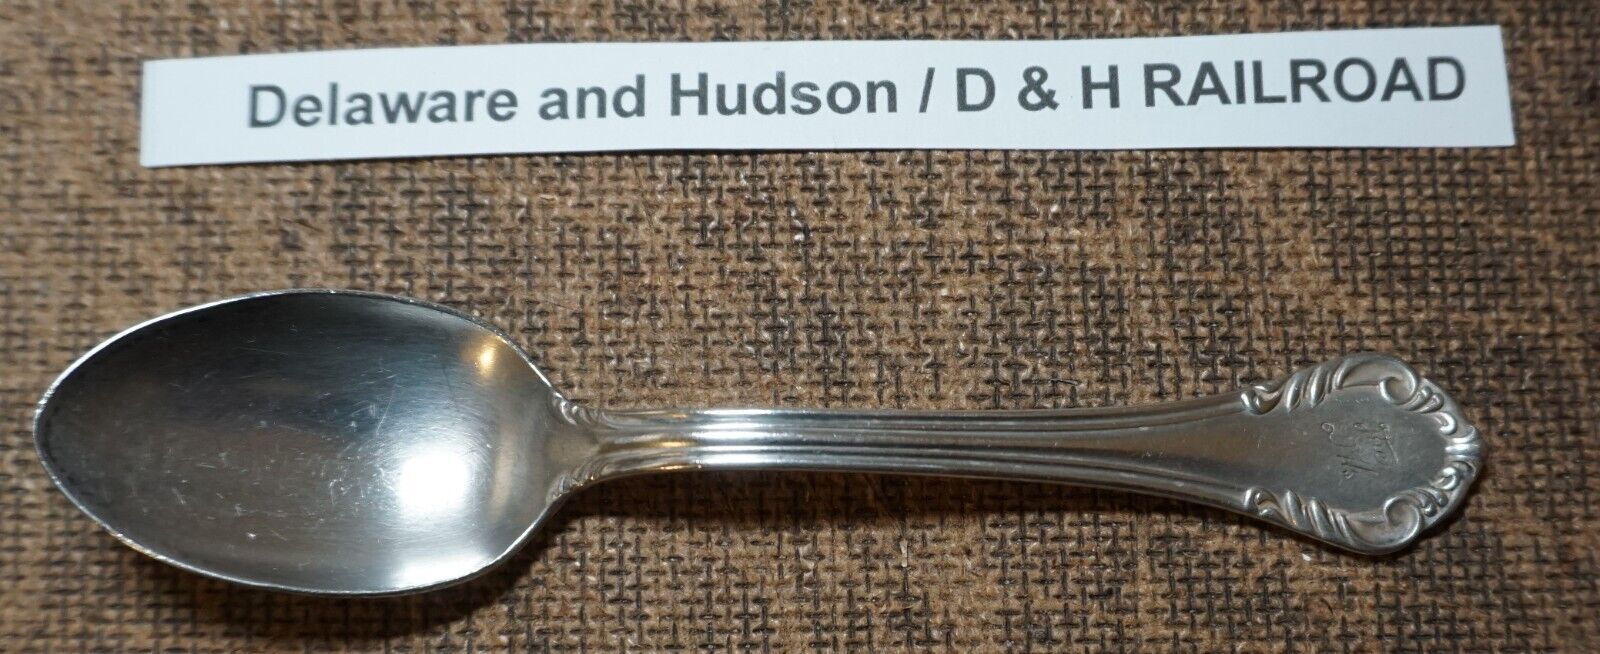 Delaware and Hudson / D & H RAILROAD Teaspoon (ROYAL) REED & BARTON SILVER PLATE